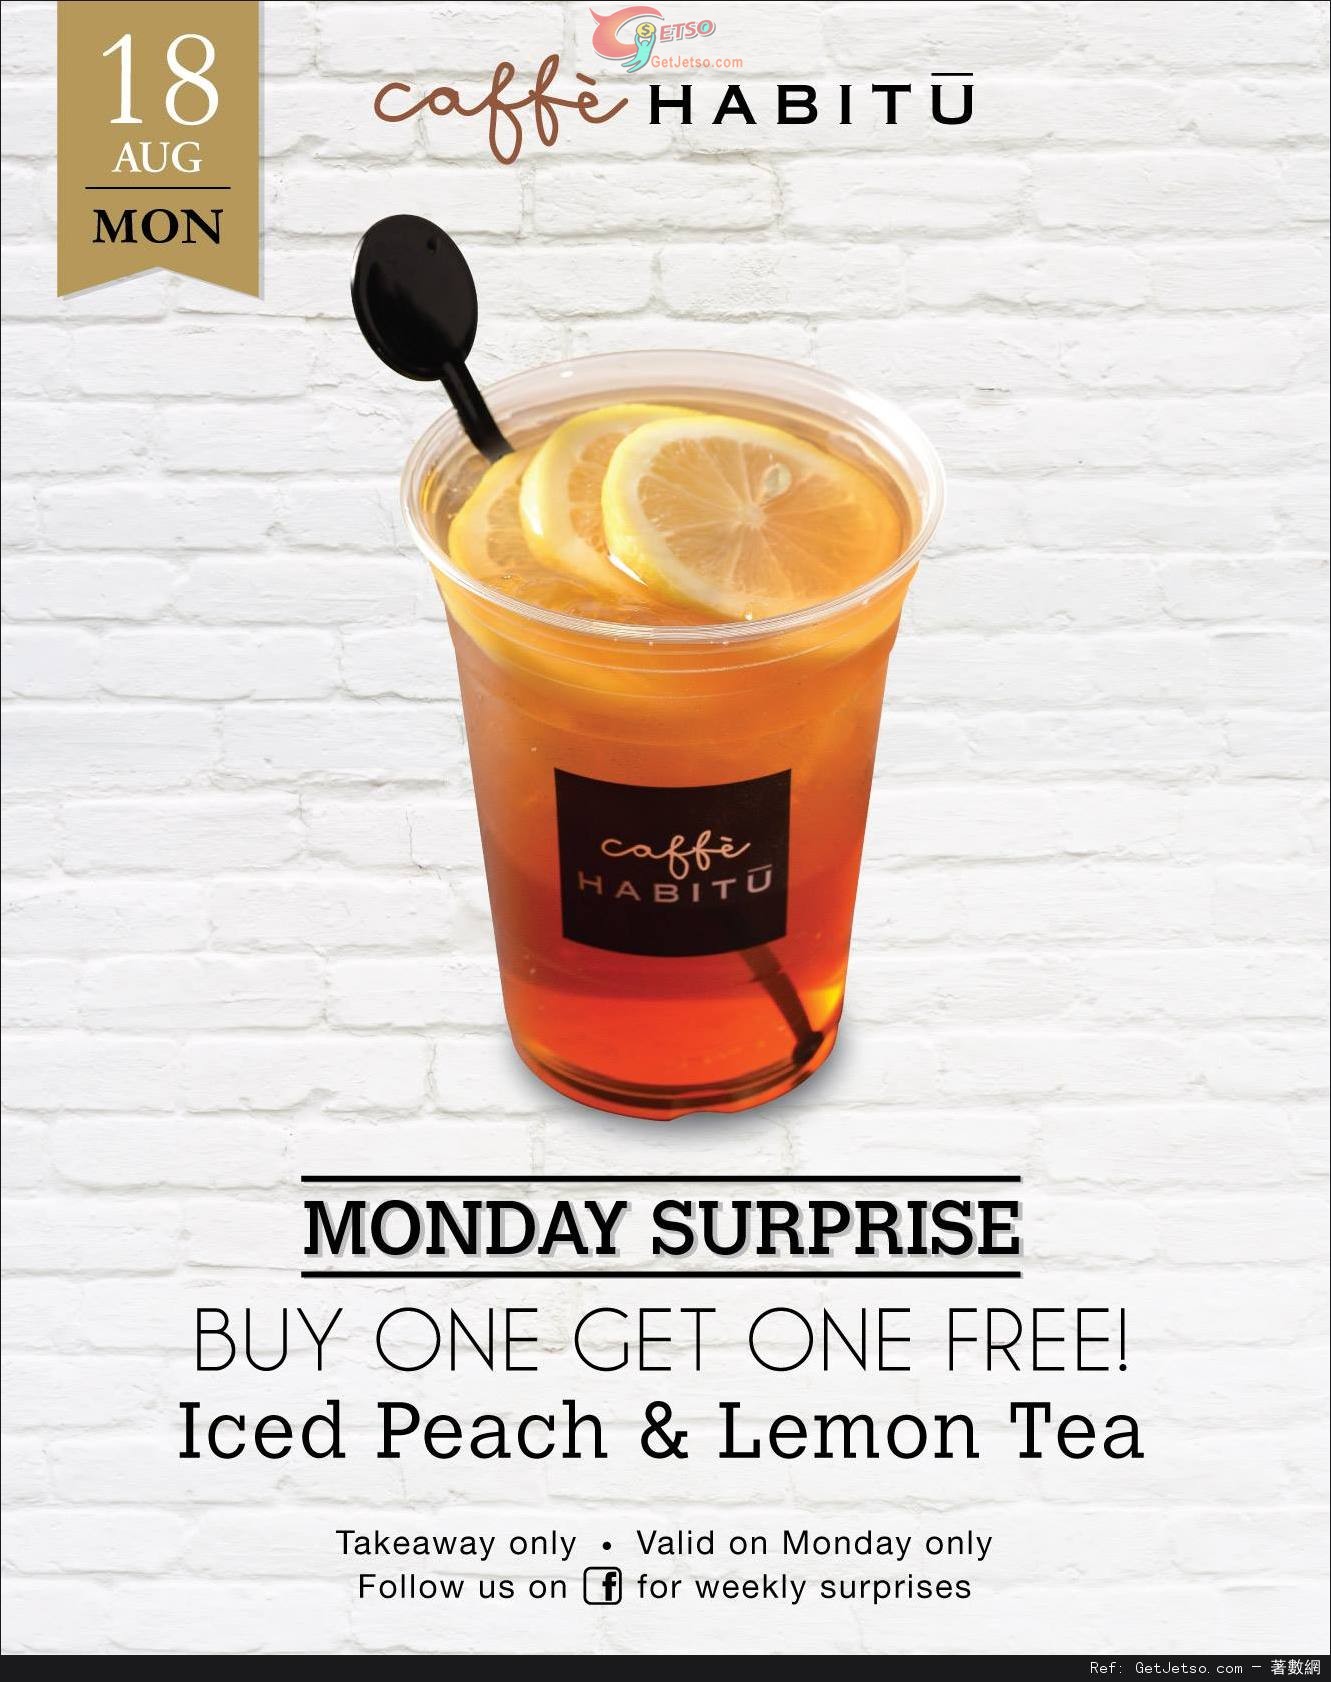 Caffe HABITU Iced Peach &Lemon Tea 買1送1優惠(14年8月18日)圖片1